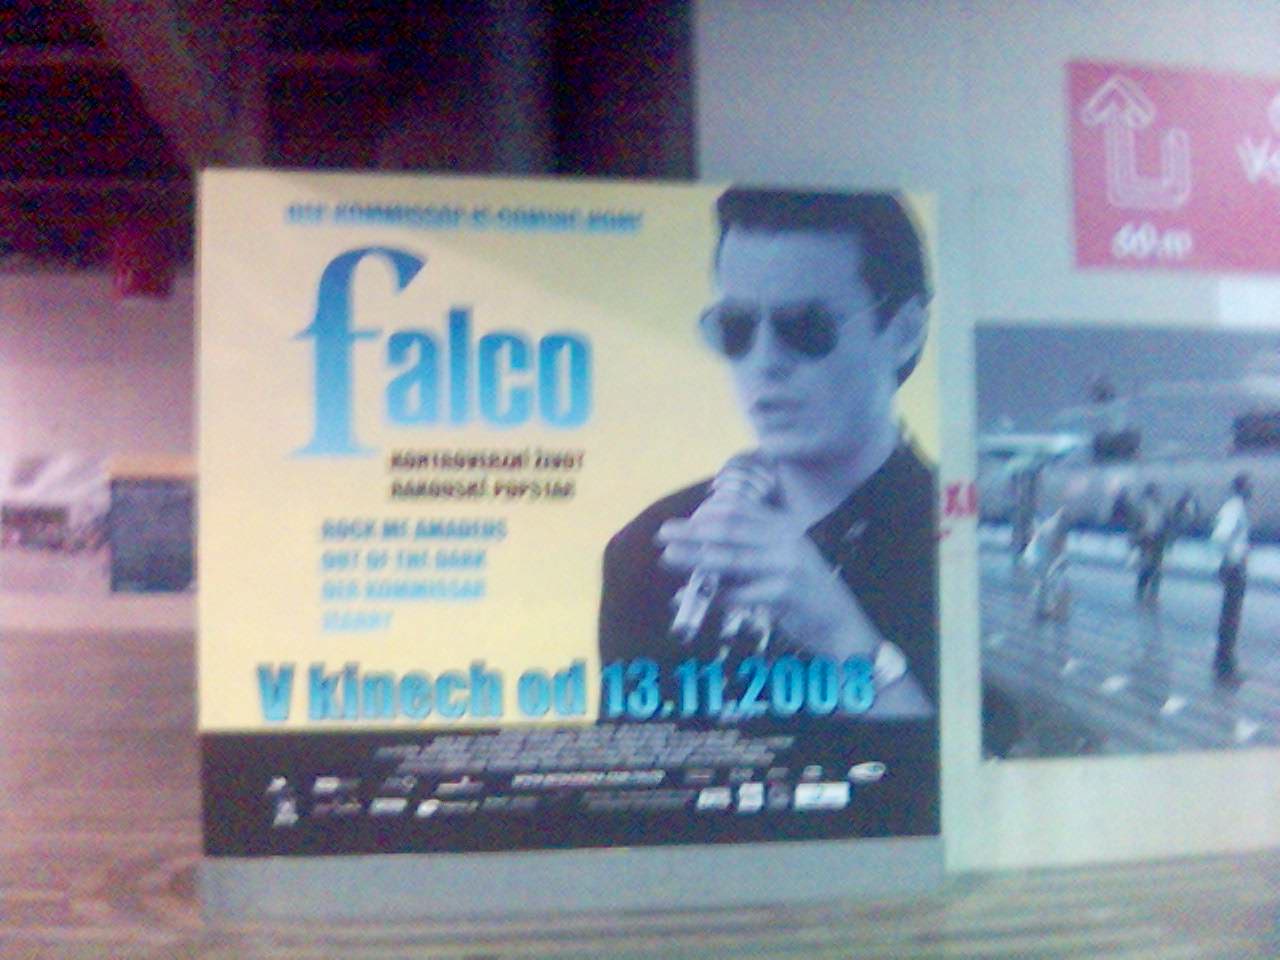 01. Plakát Falco.jpg